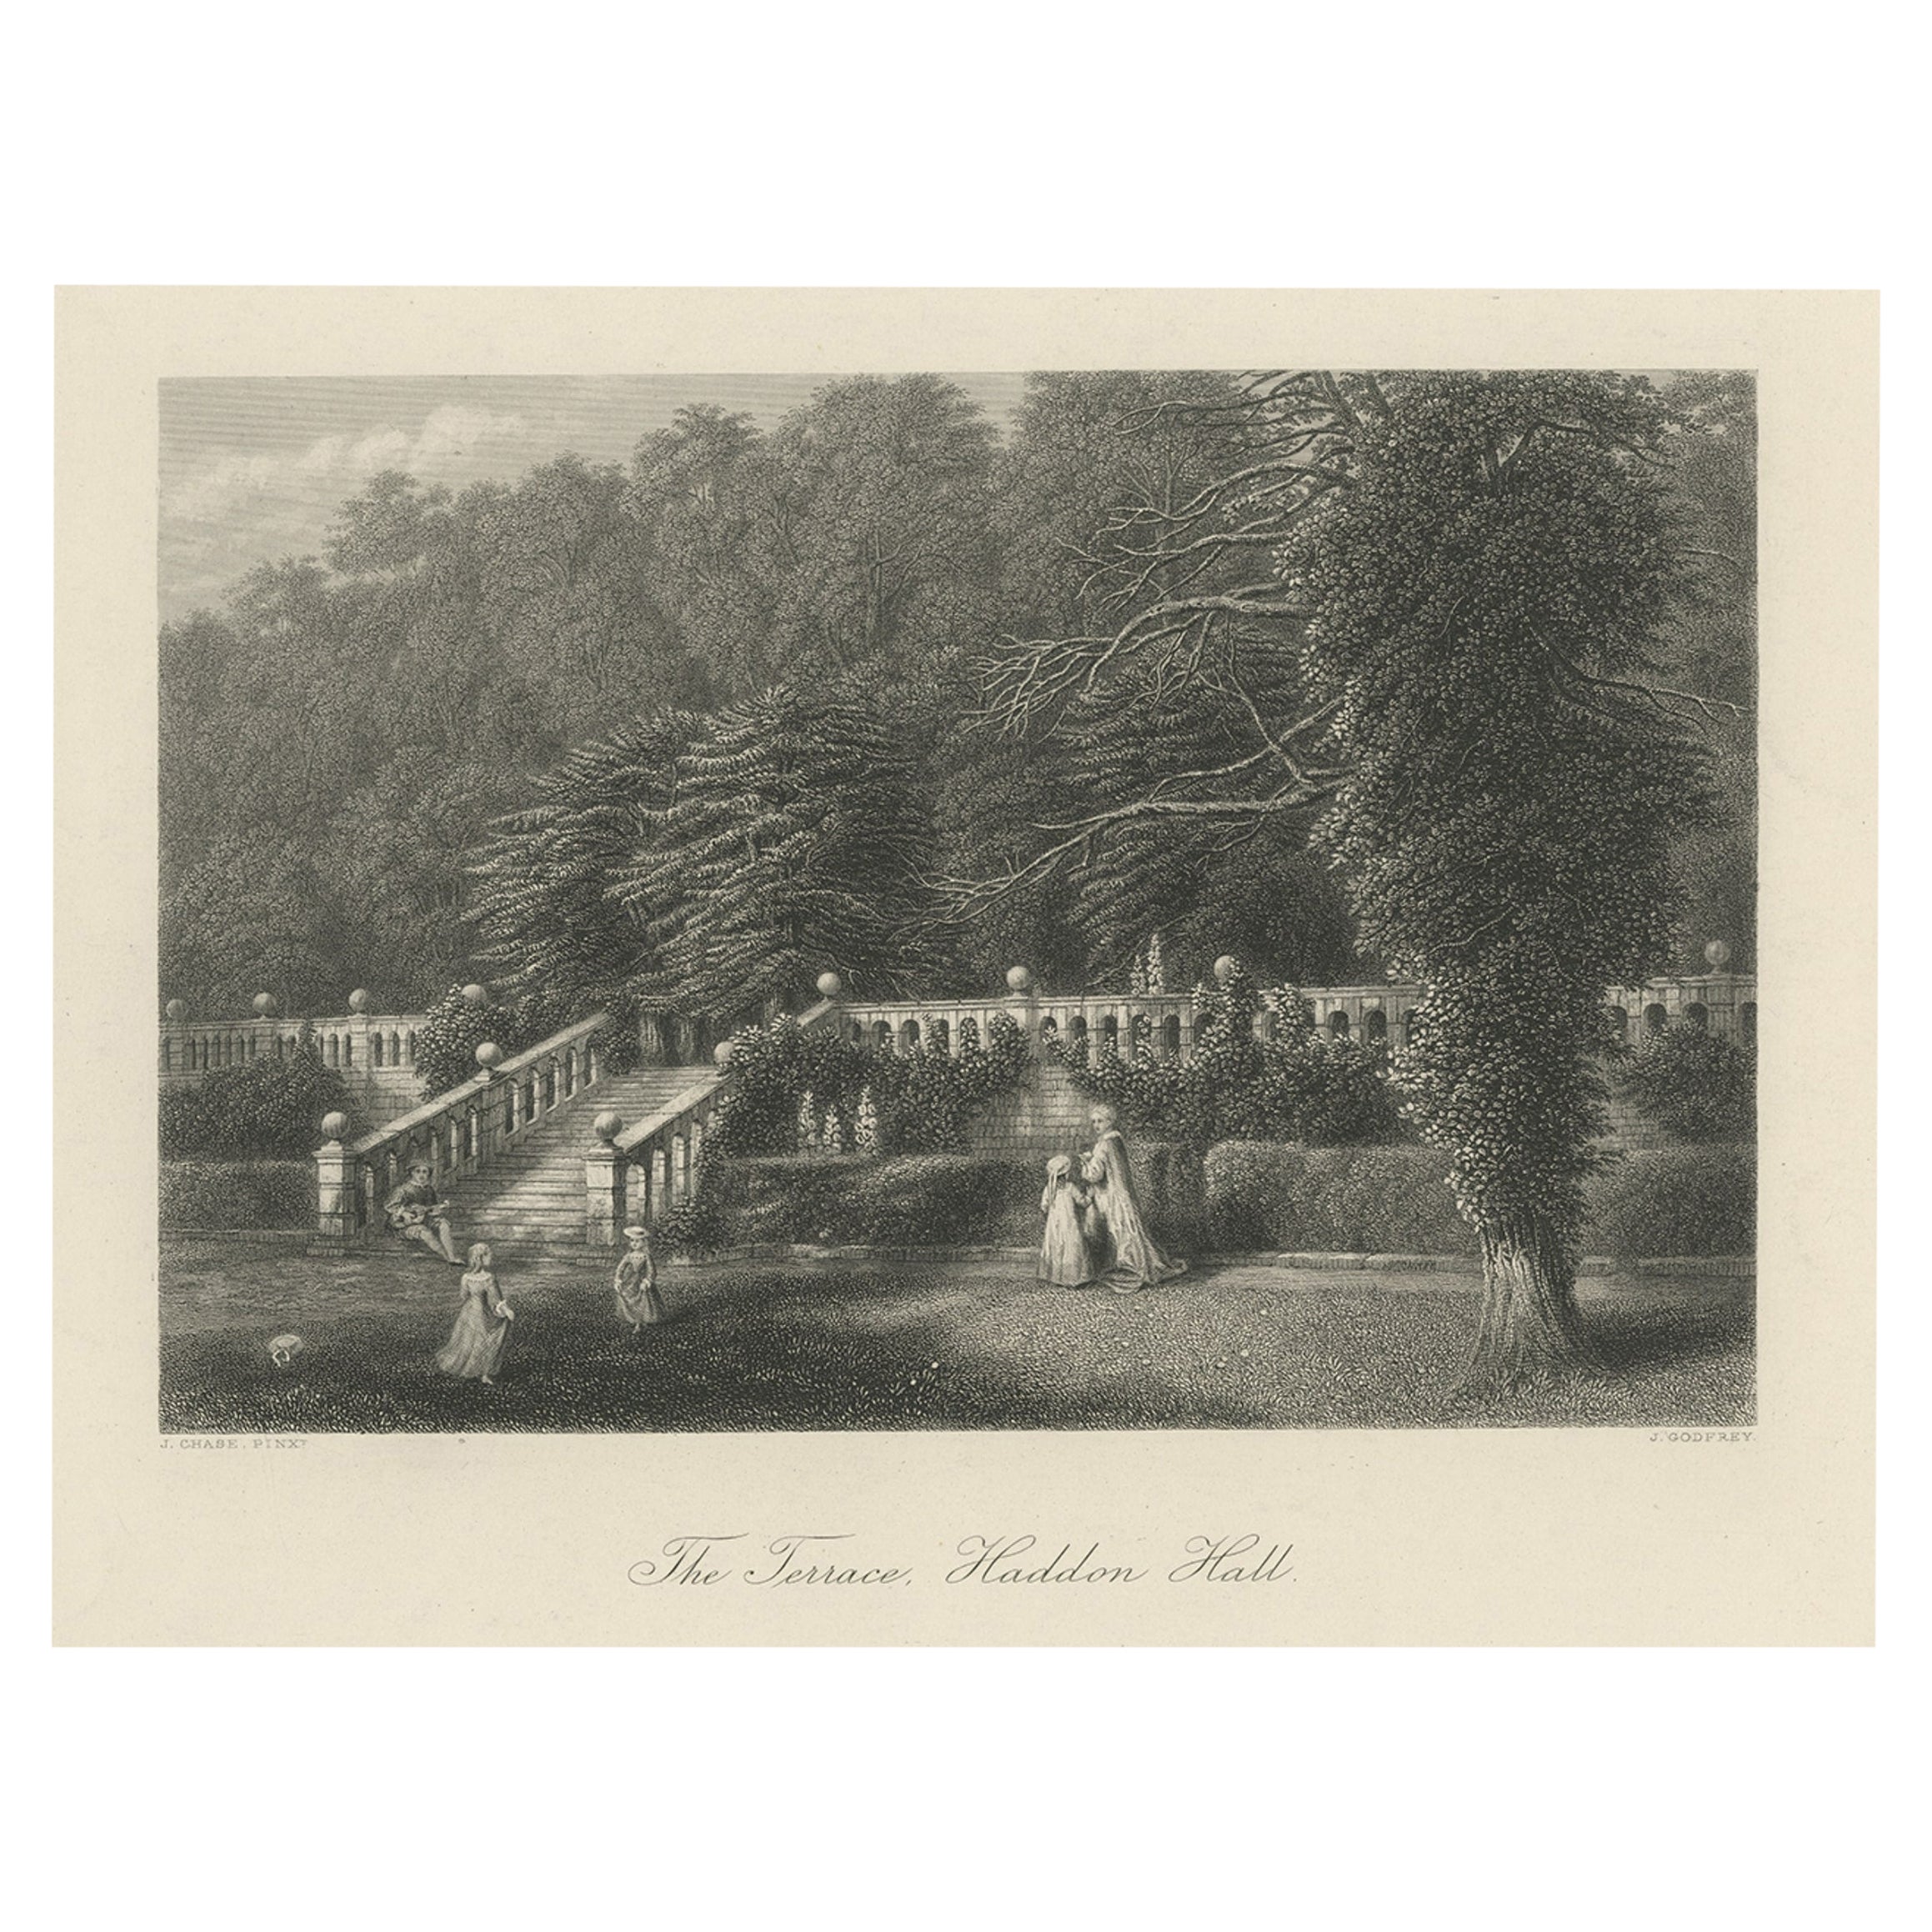 Gravure en acier d' Haddon Hall, River Wye, Bakewell, Derbyshire, Angleterre, 1875